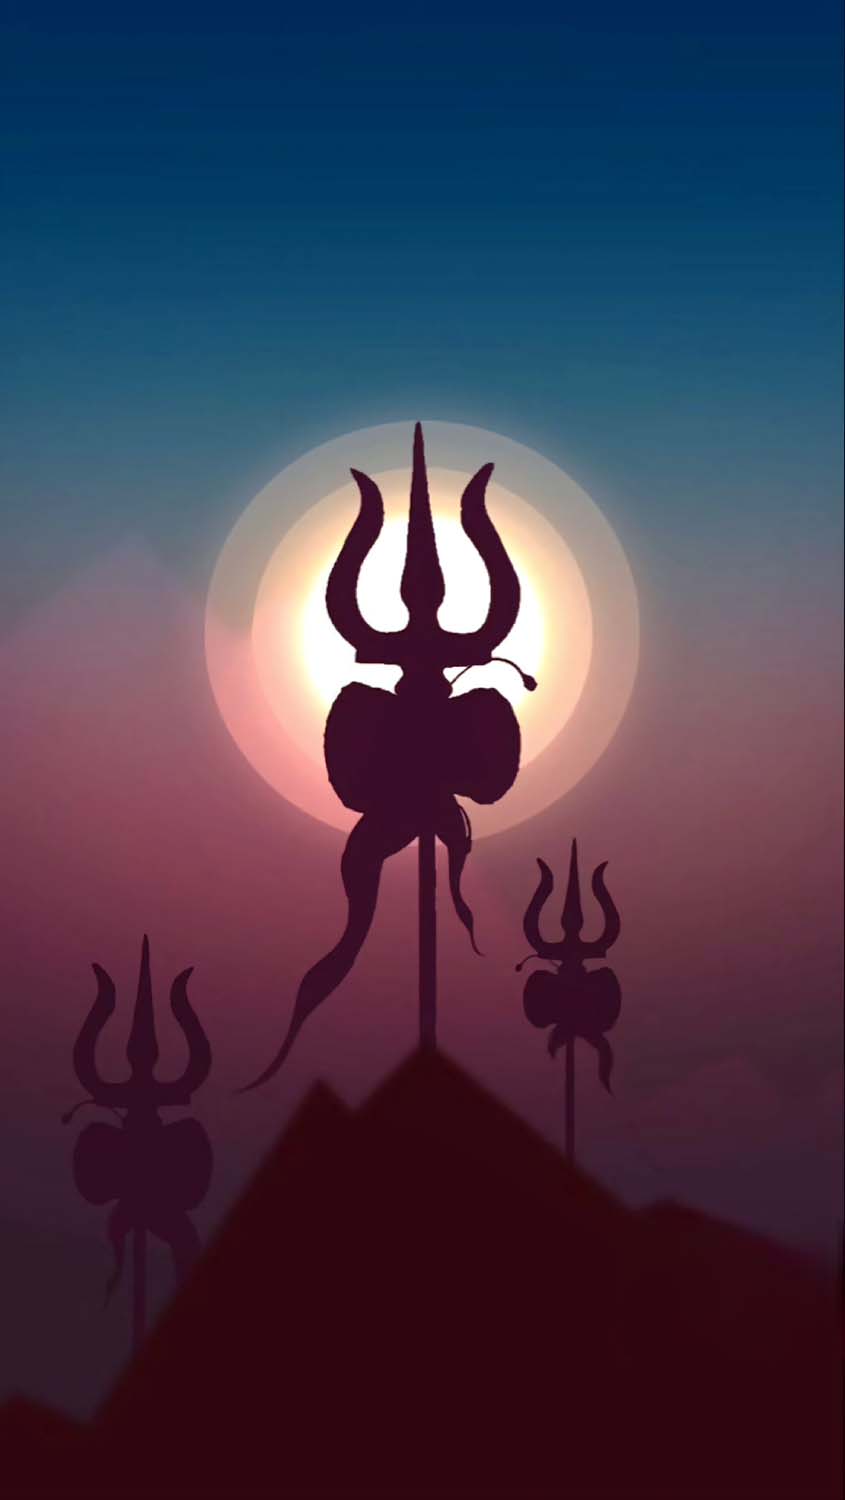 Shiva Trishul iPhone Wallpaper HD